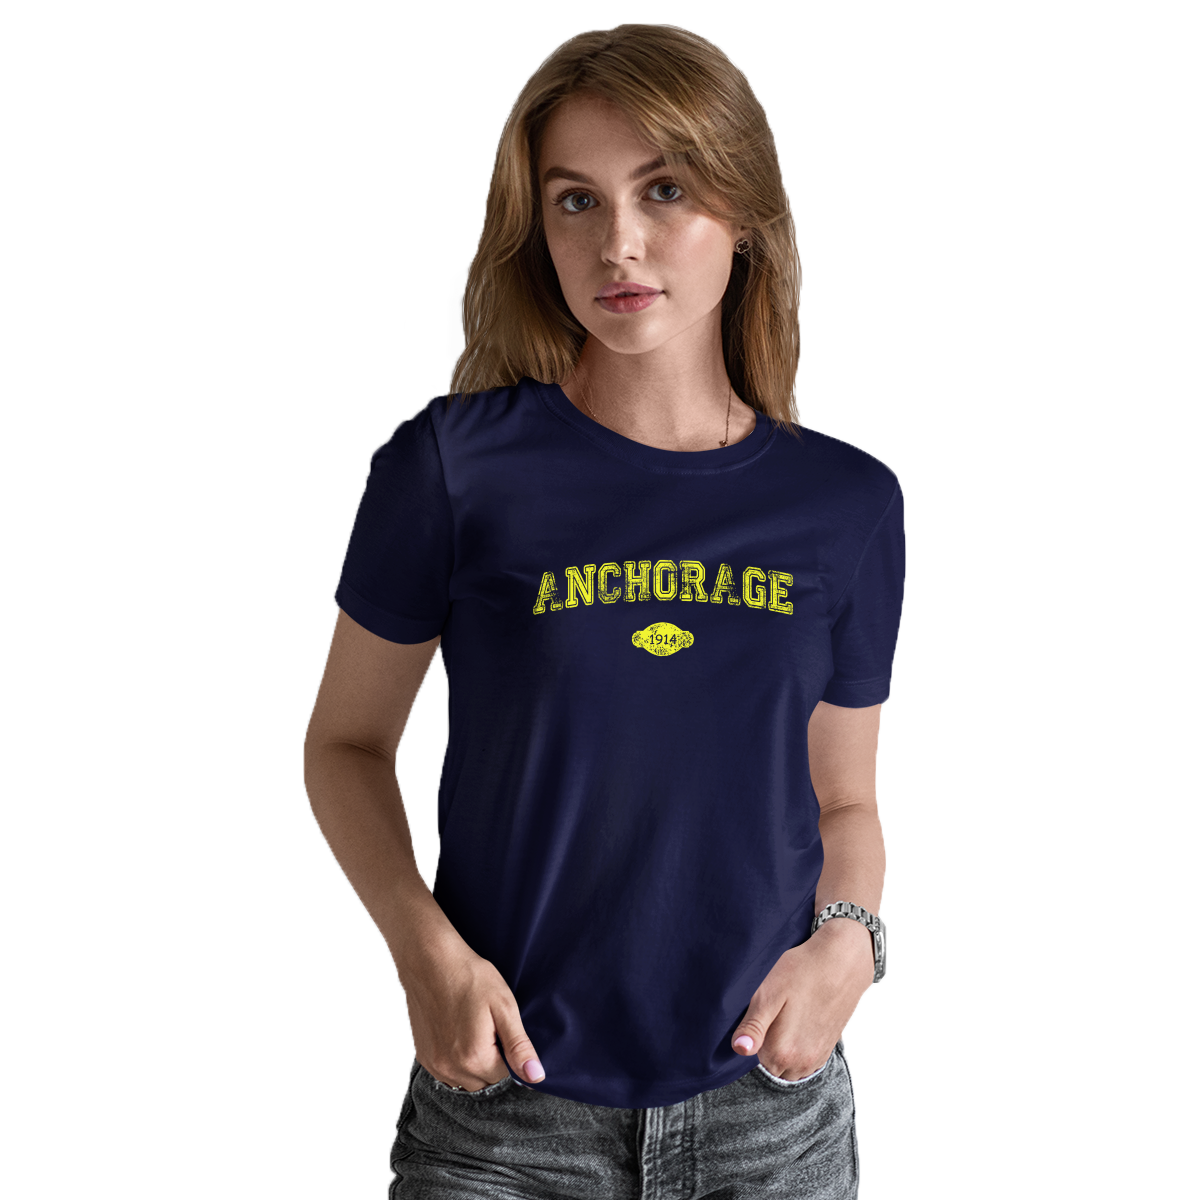 Anchorage 1914 Represent Women's T-shirt | Navy